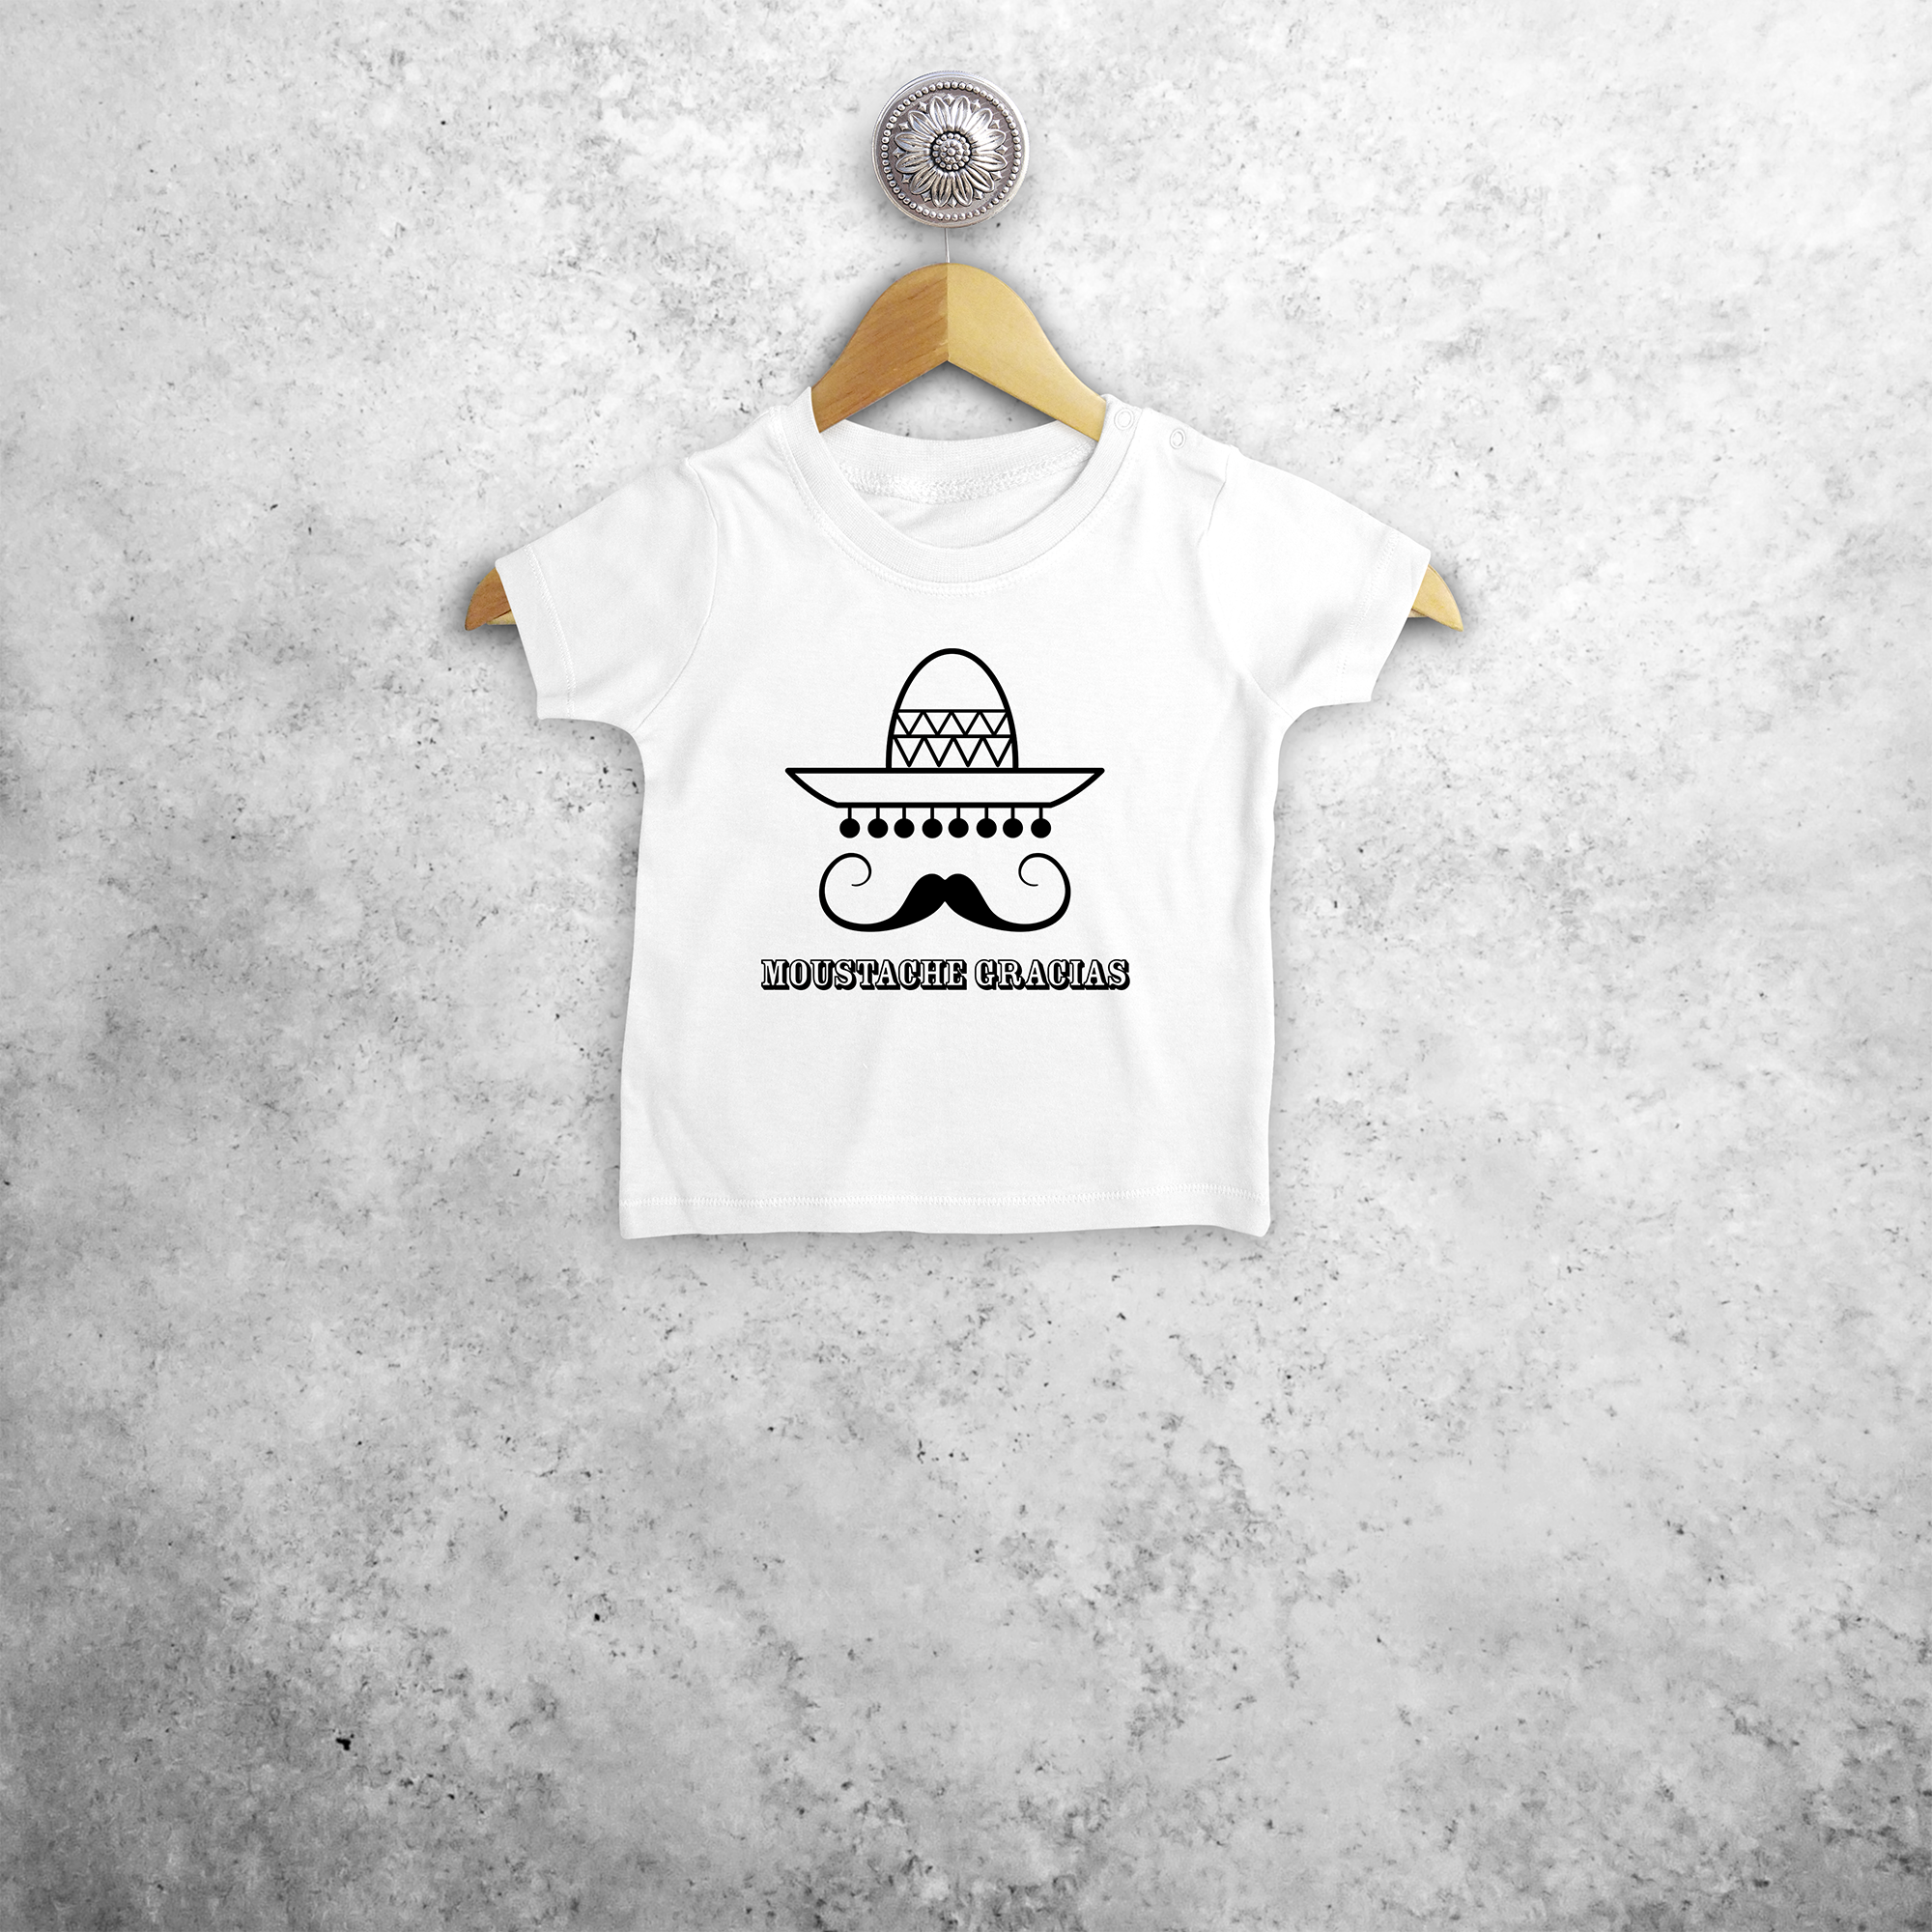 'Moustache gracias' baby shortsleeve shirt